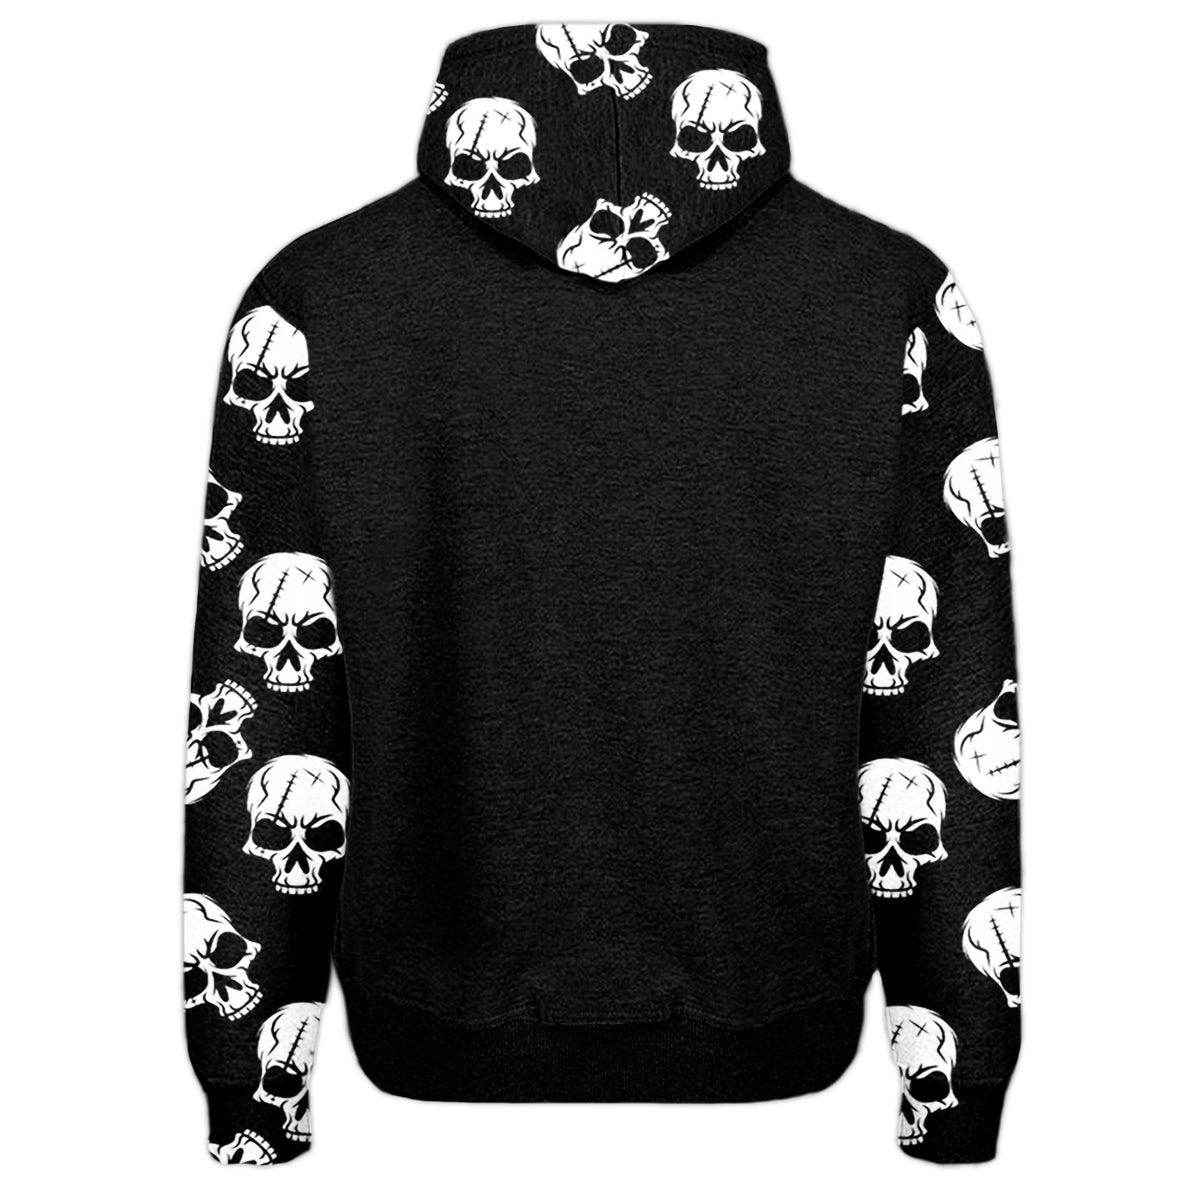 I See People Skull Gothic All Over Print Unisex Pullover Hoodie | Wonder Skull